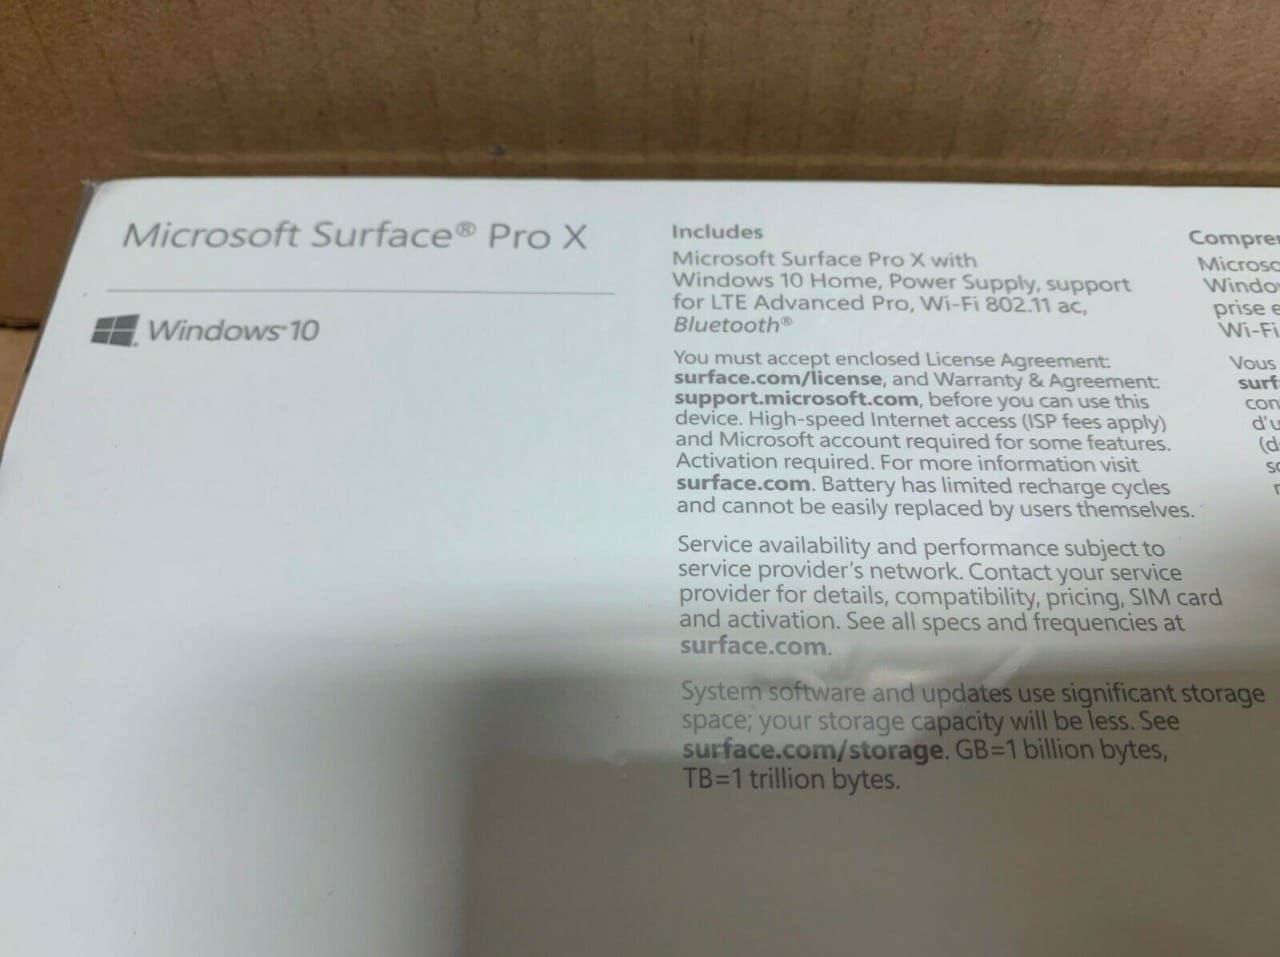 Brand New Microsoft Surface Pro X SQ2 - 16GB Go RAM 512GB SSD Platinum